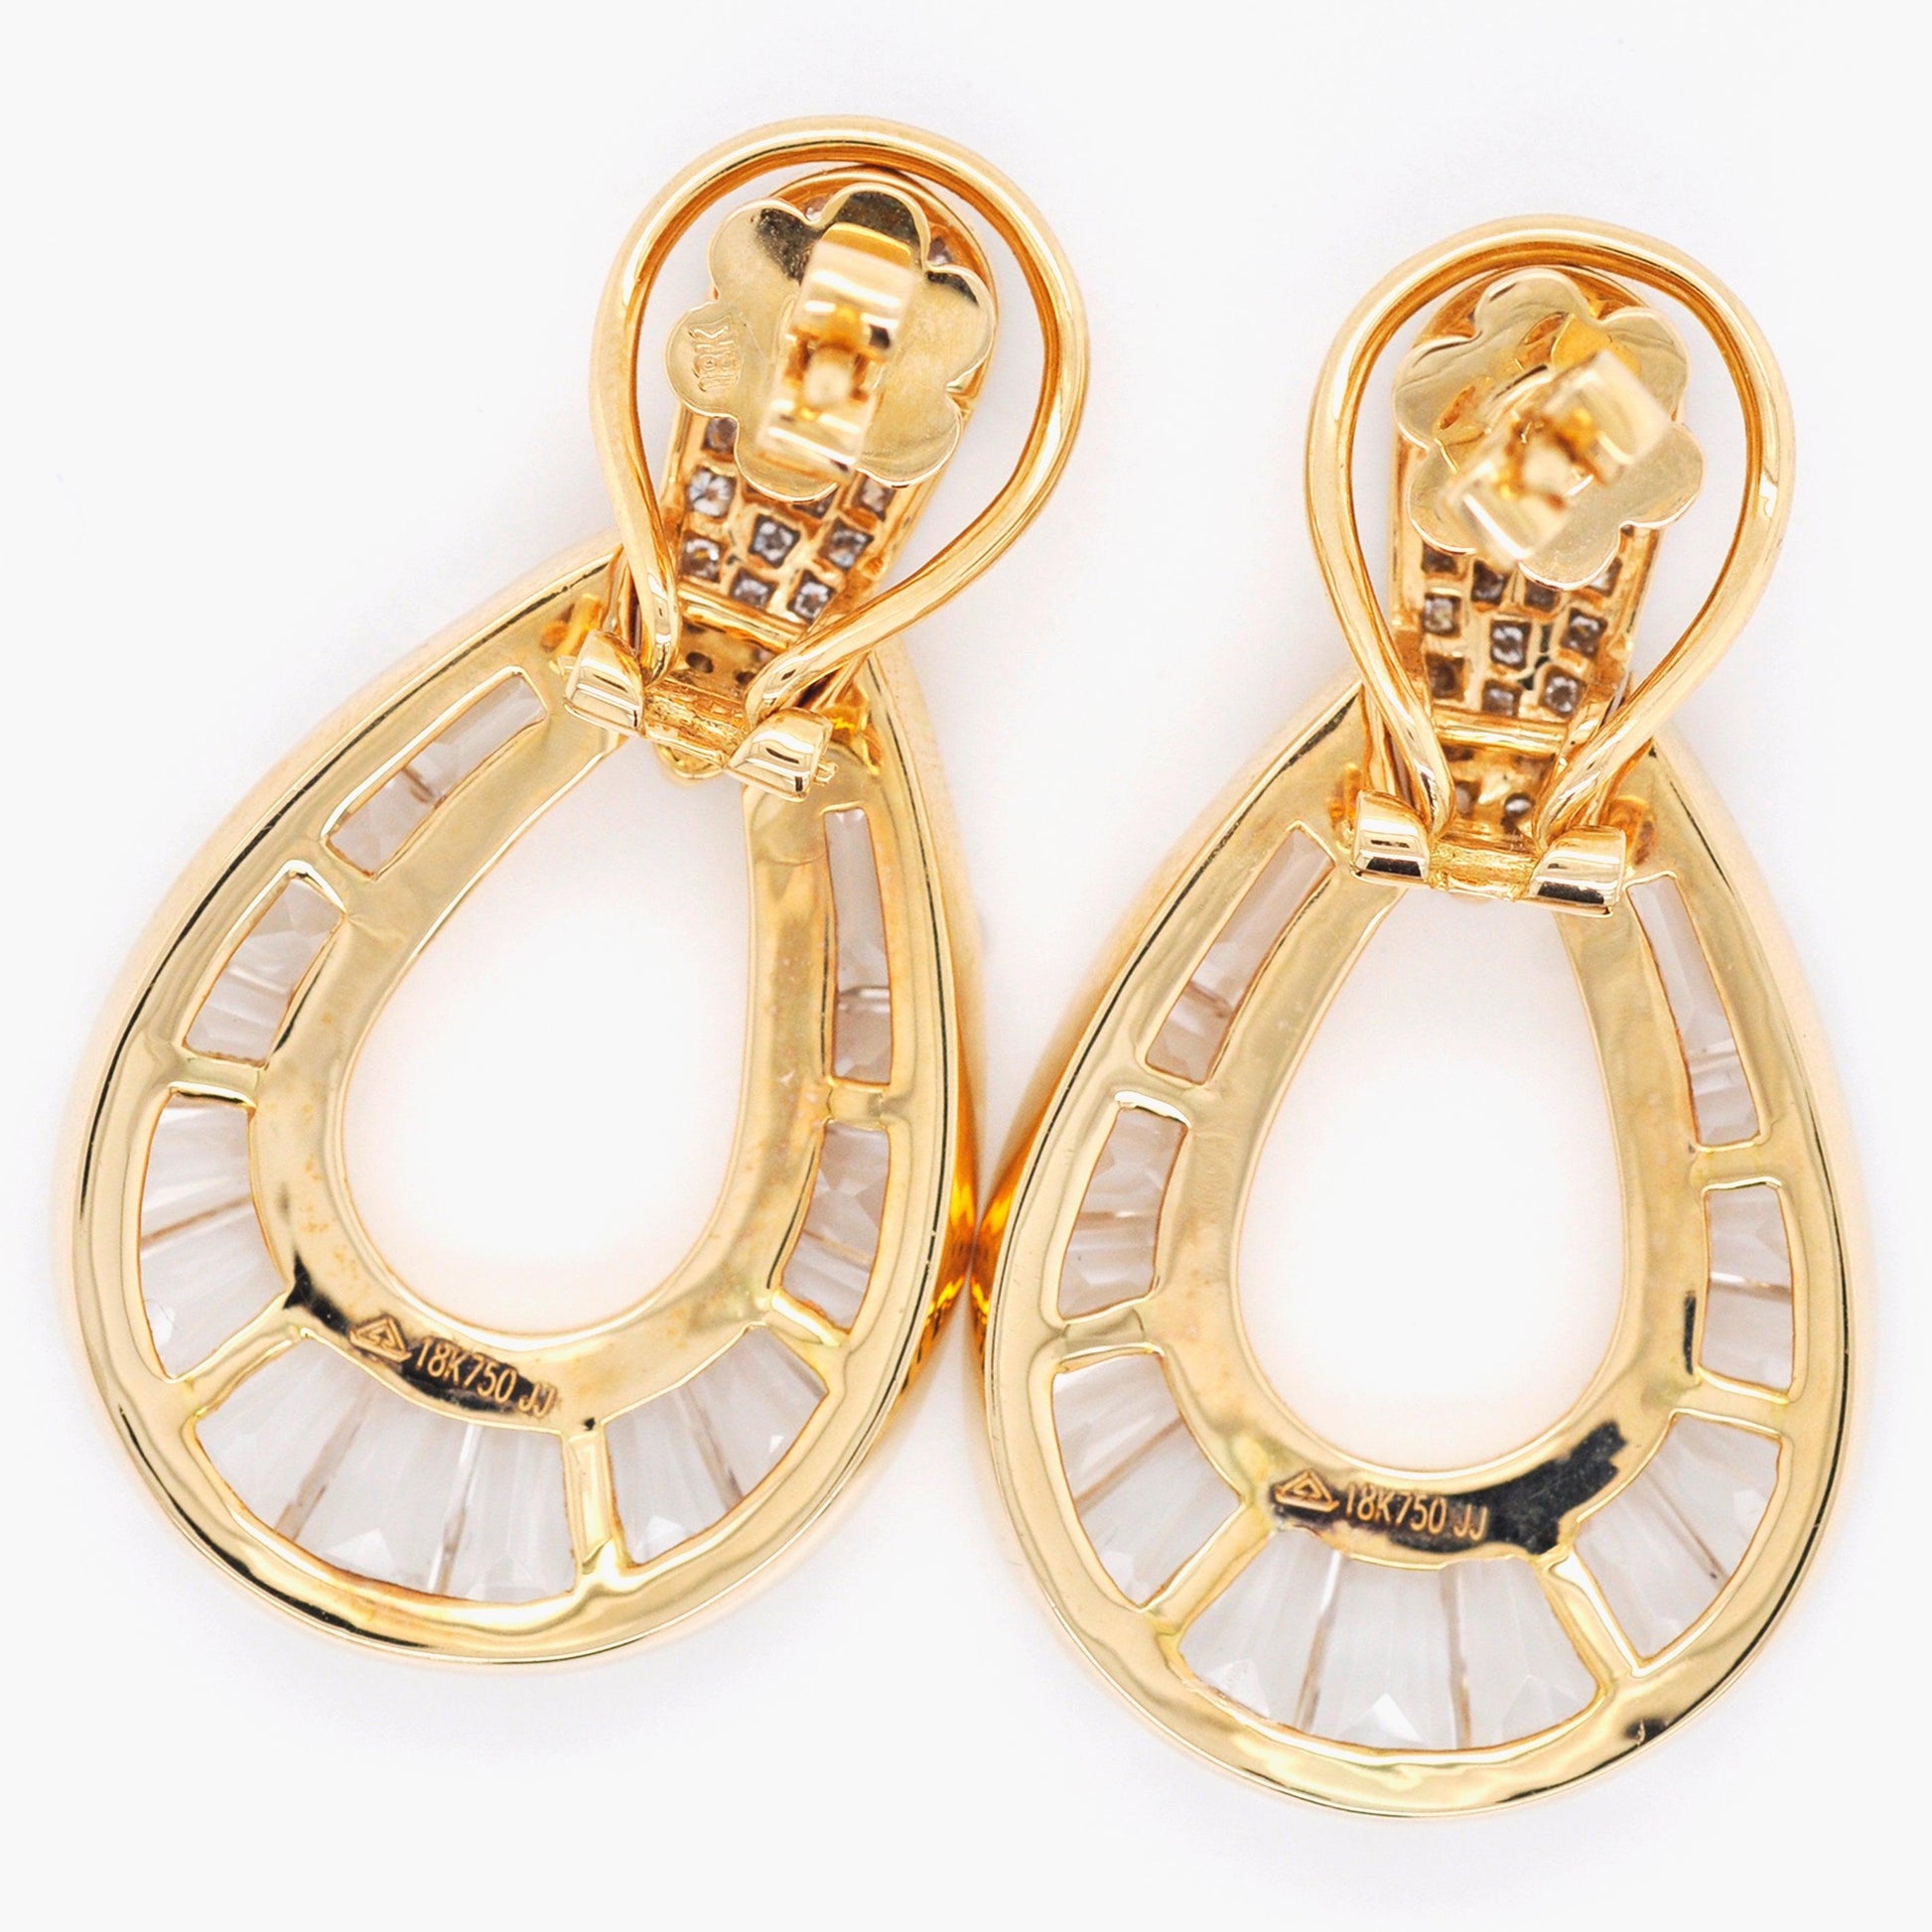 Topaz gemstone raindrop earrings